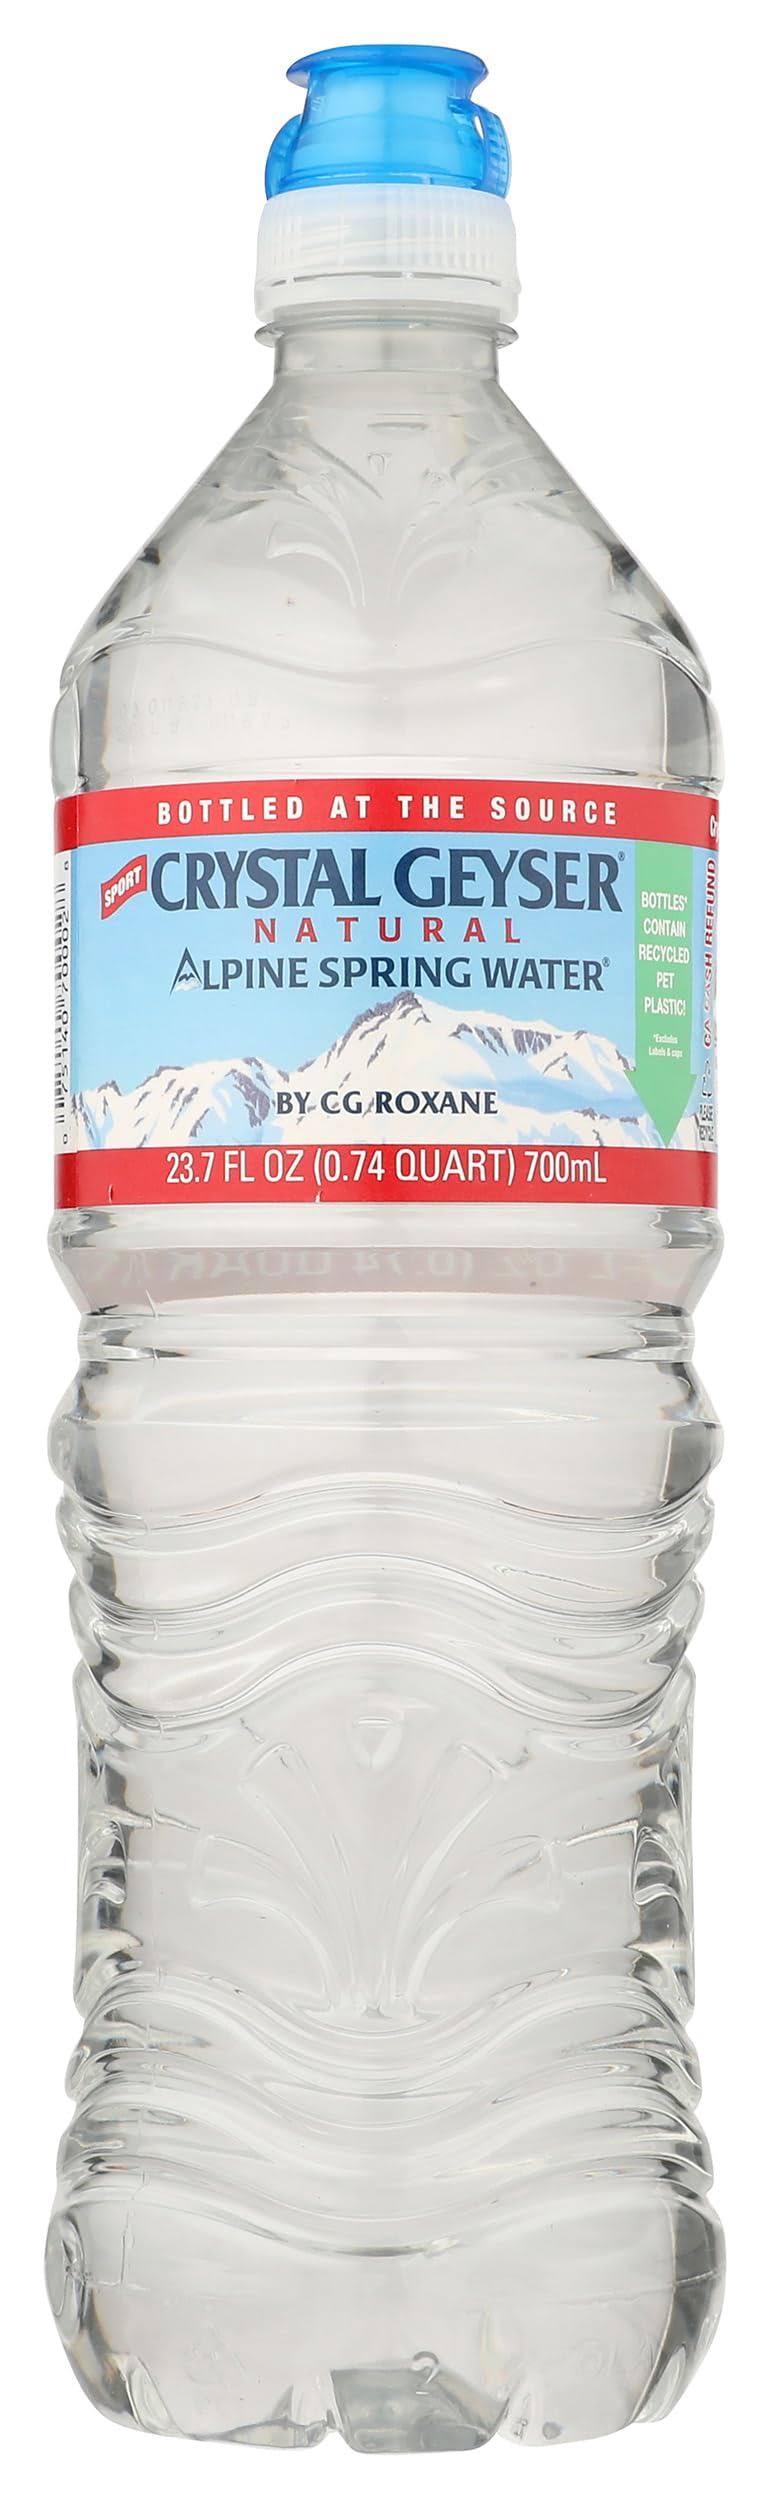 Crystal Geyser Alpine Spring Water - 23.6oz